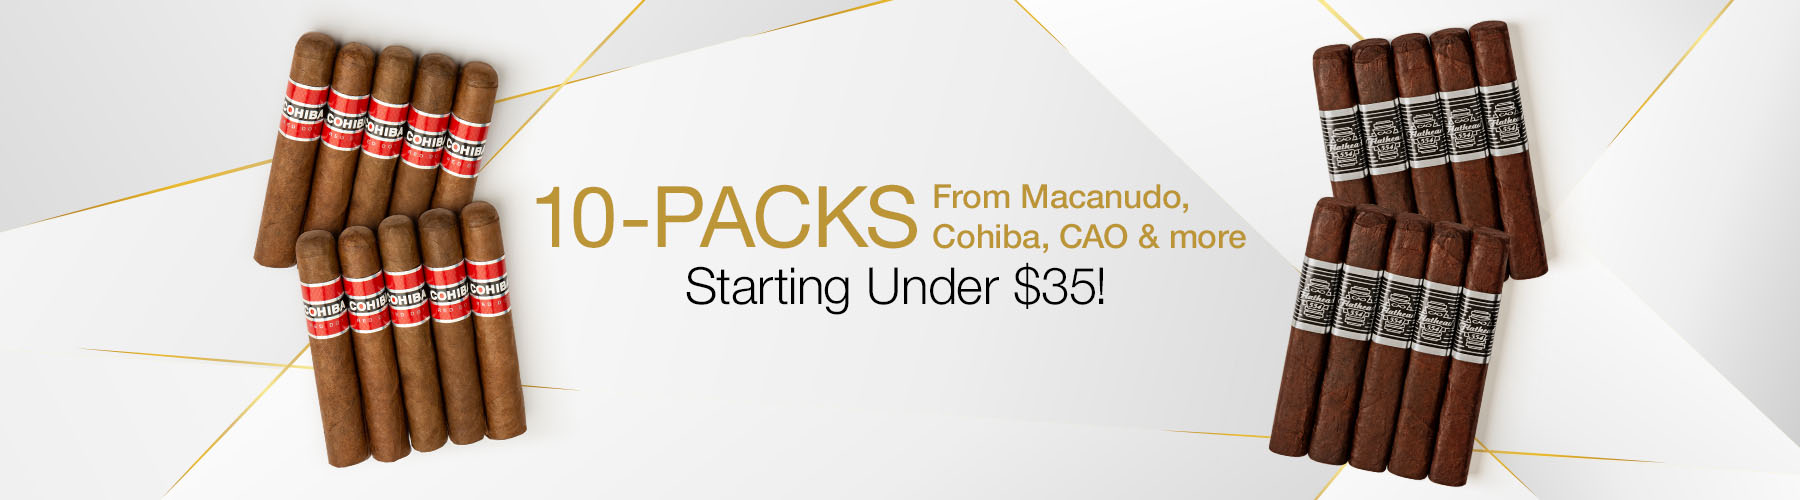 10-packs from Macanudo, Cohiba, CAO & More
Starting under $35!